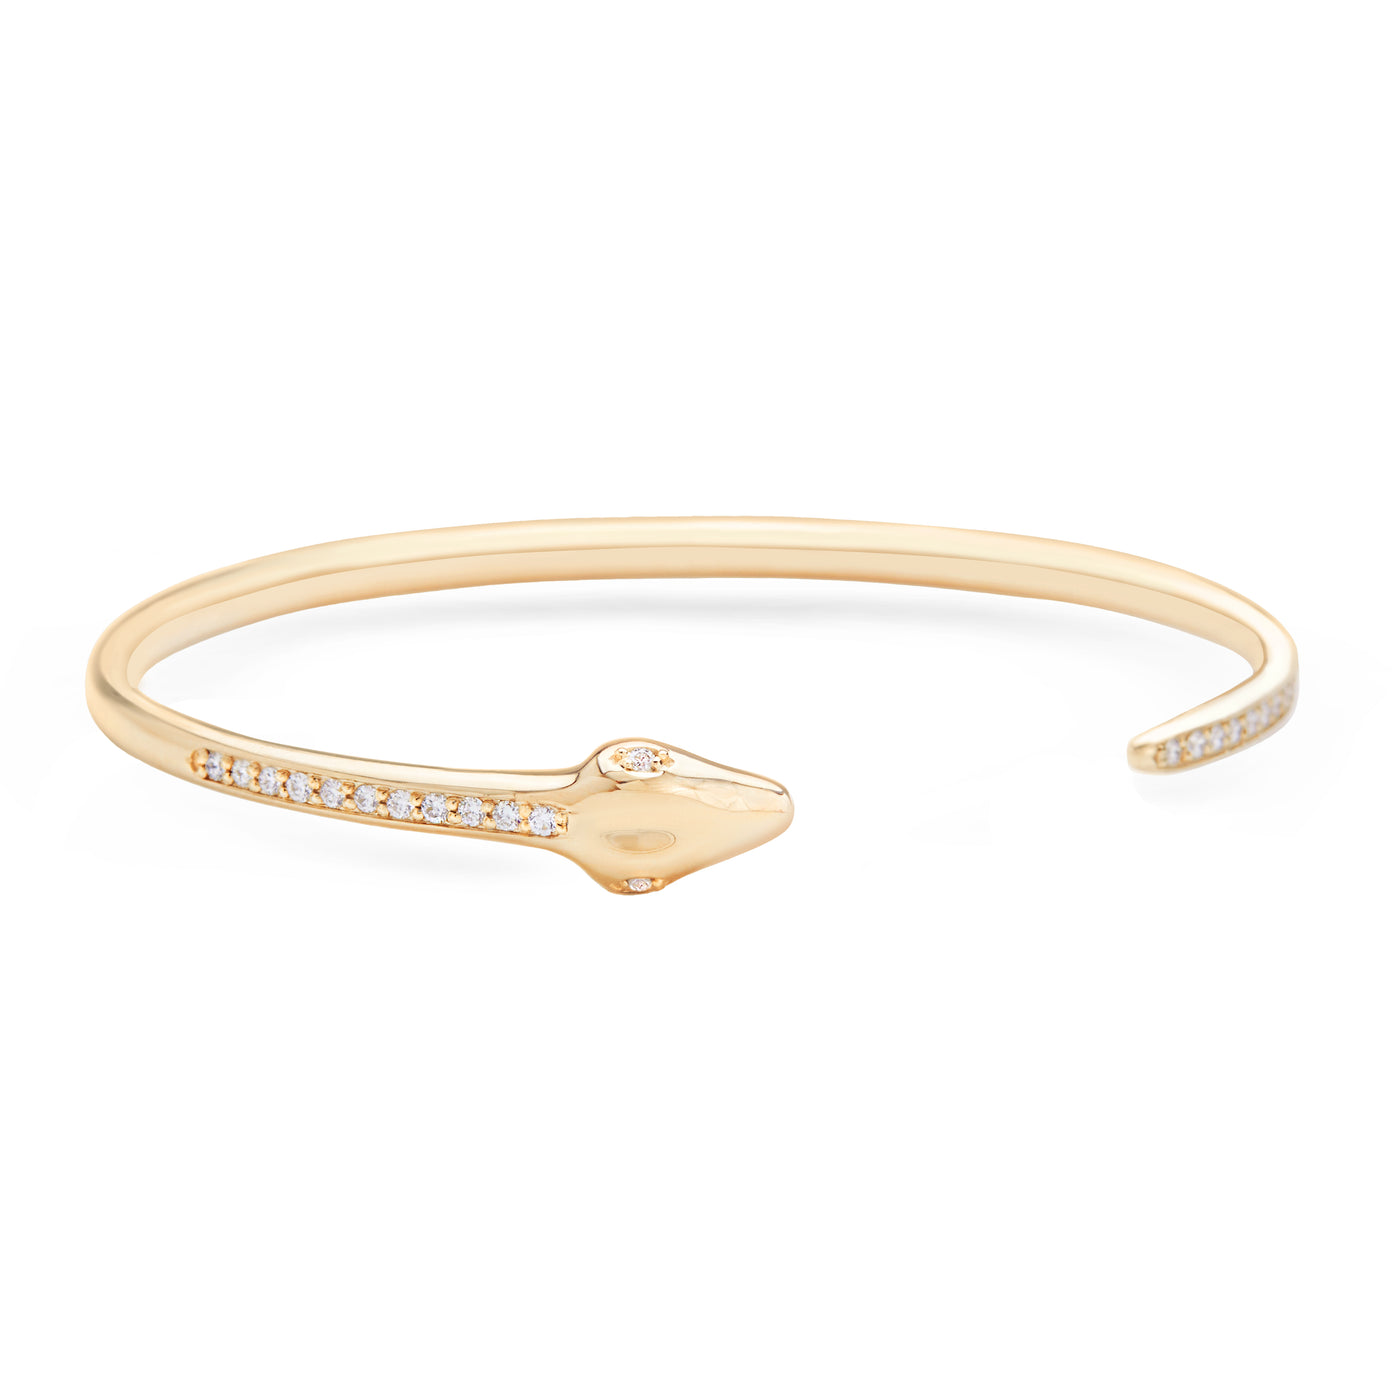 14k Karat yellow gold snake cuff bracelet with diamonds on white background